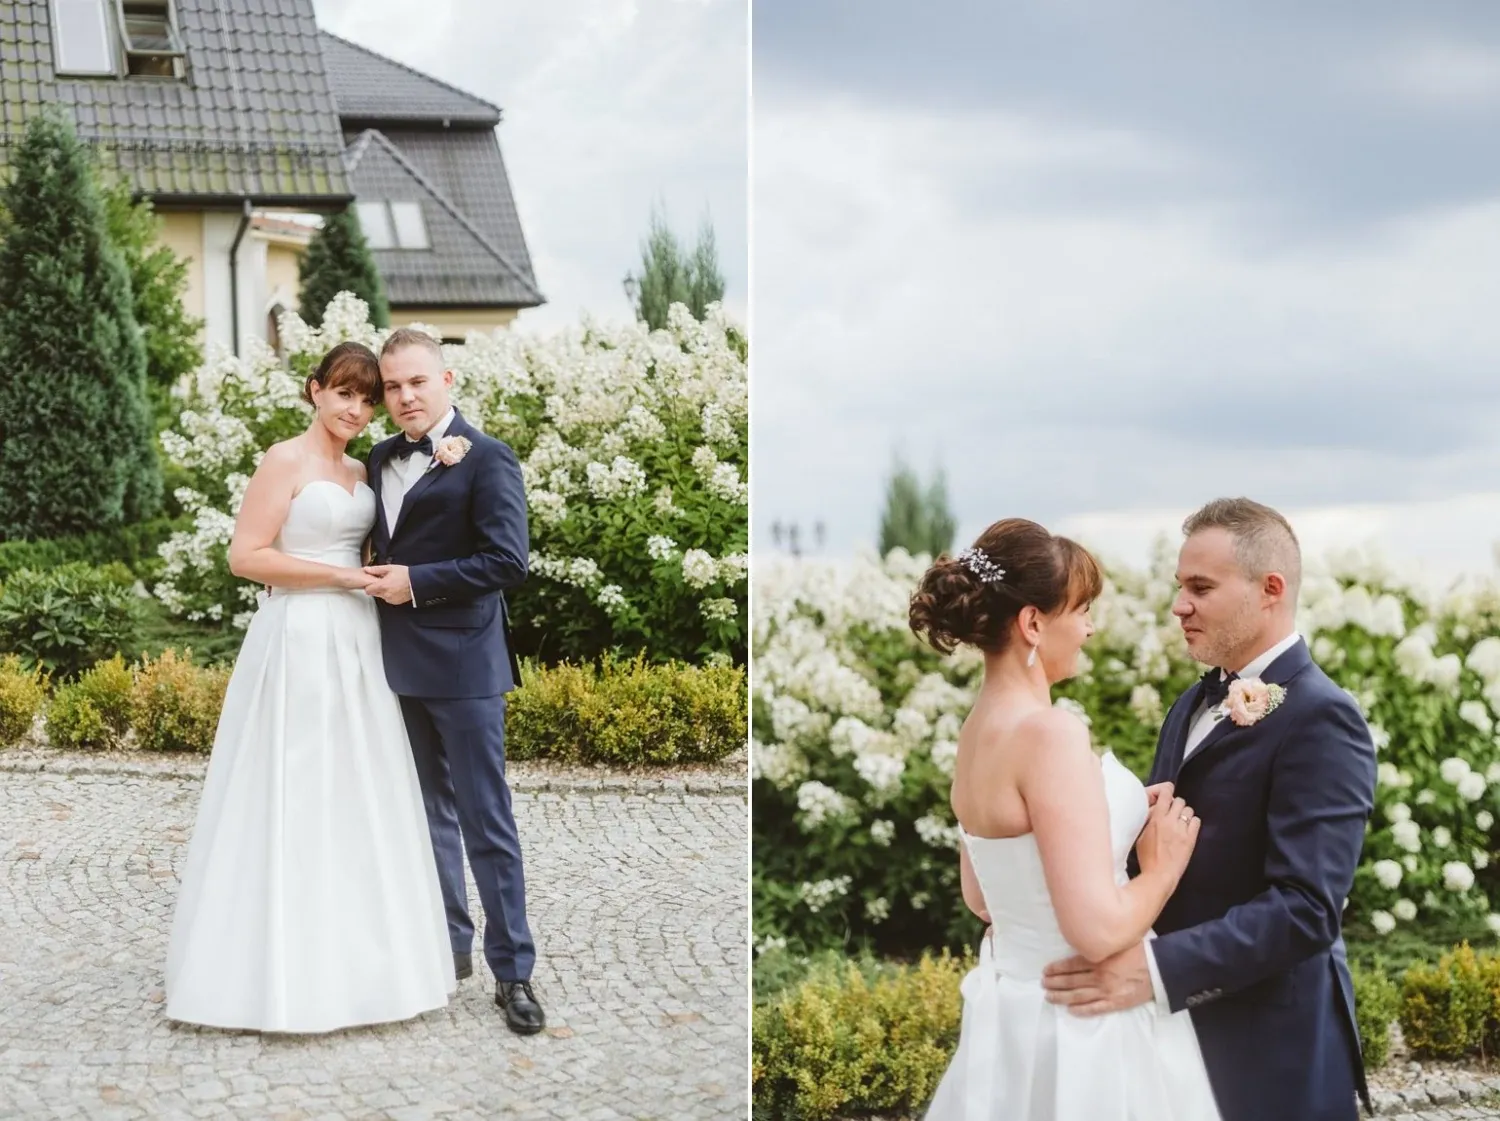 agnieszkaprzemek_wedding_14.webp - Agnieszka & Przemek- Monika Chmielewska - wedding, portaits, family photography - Munich